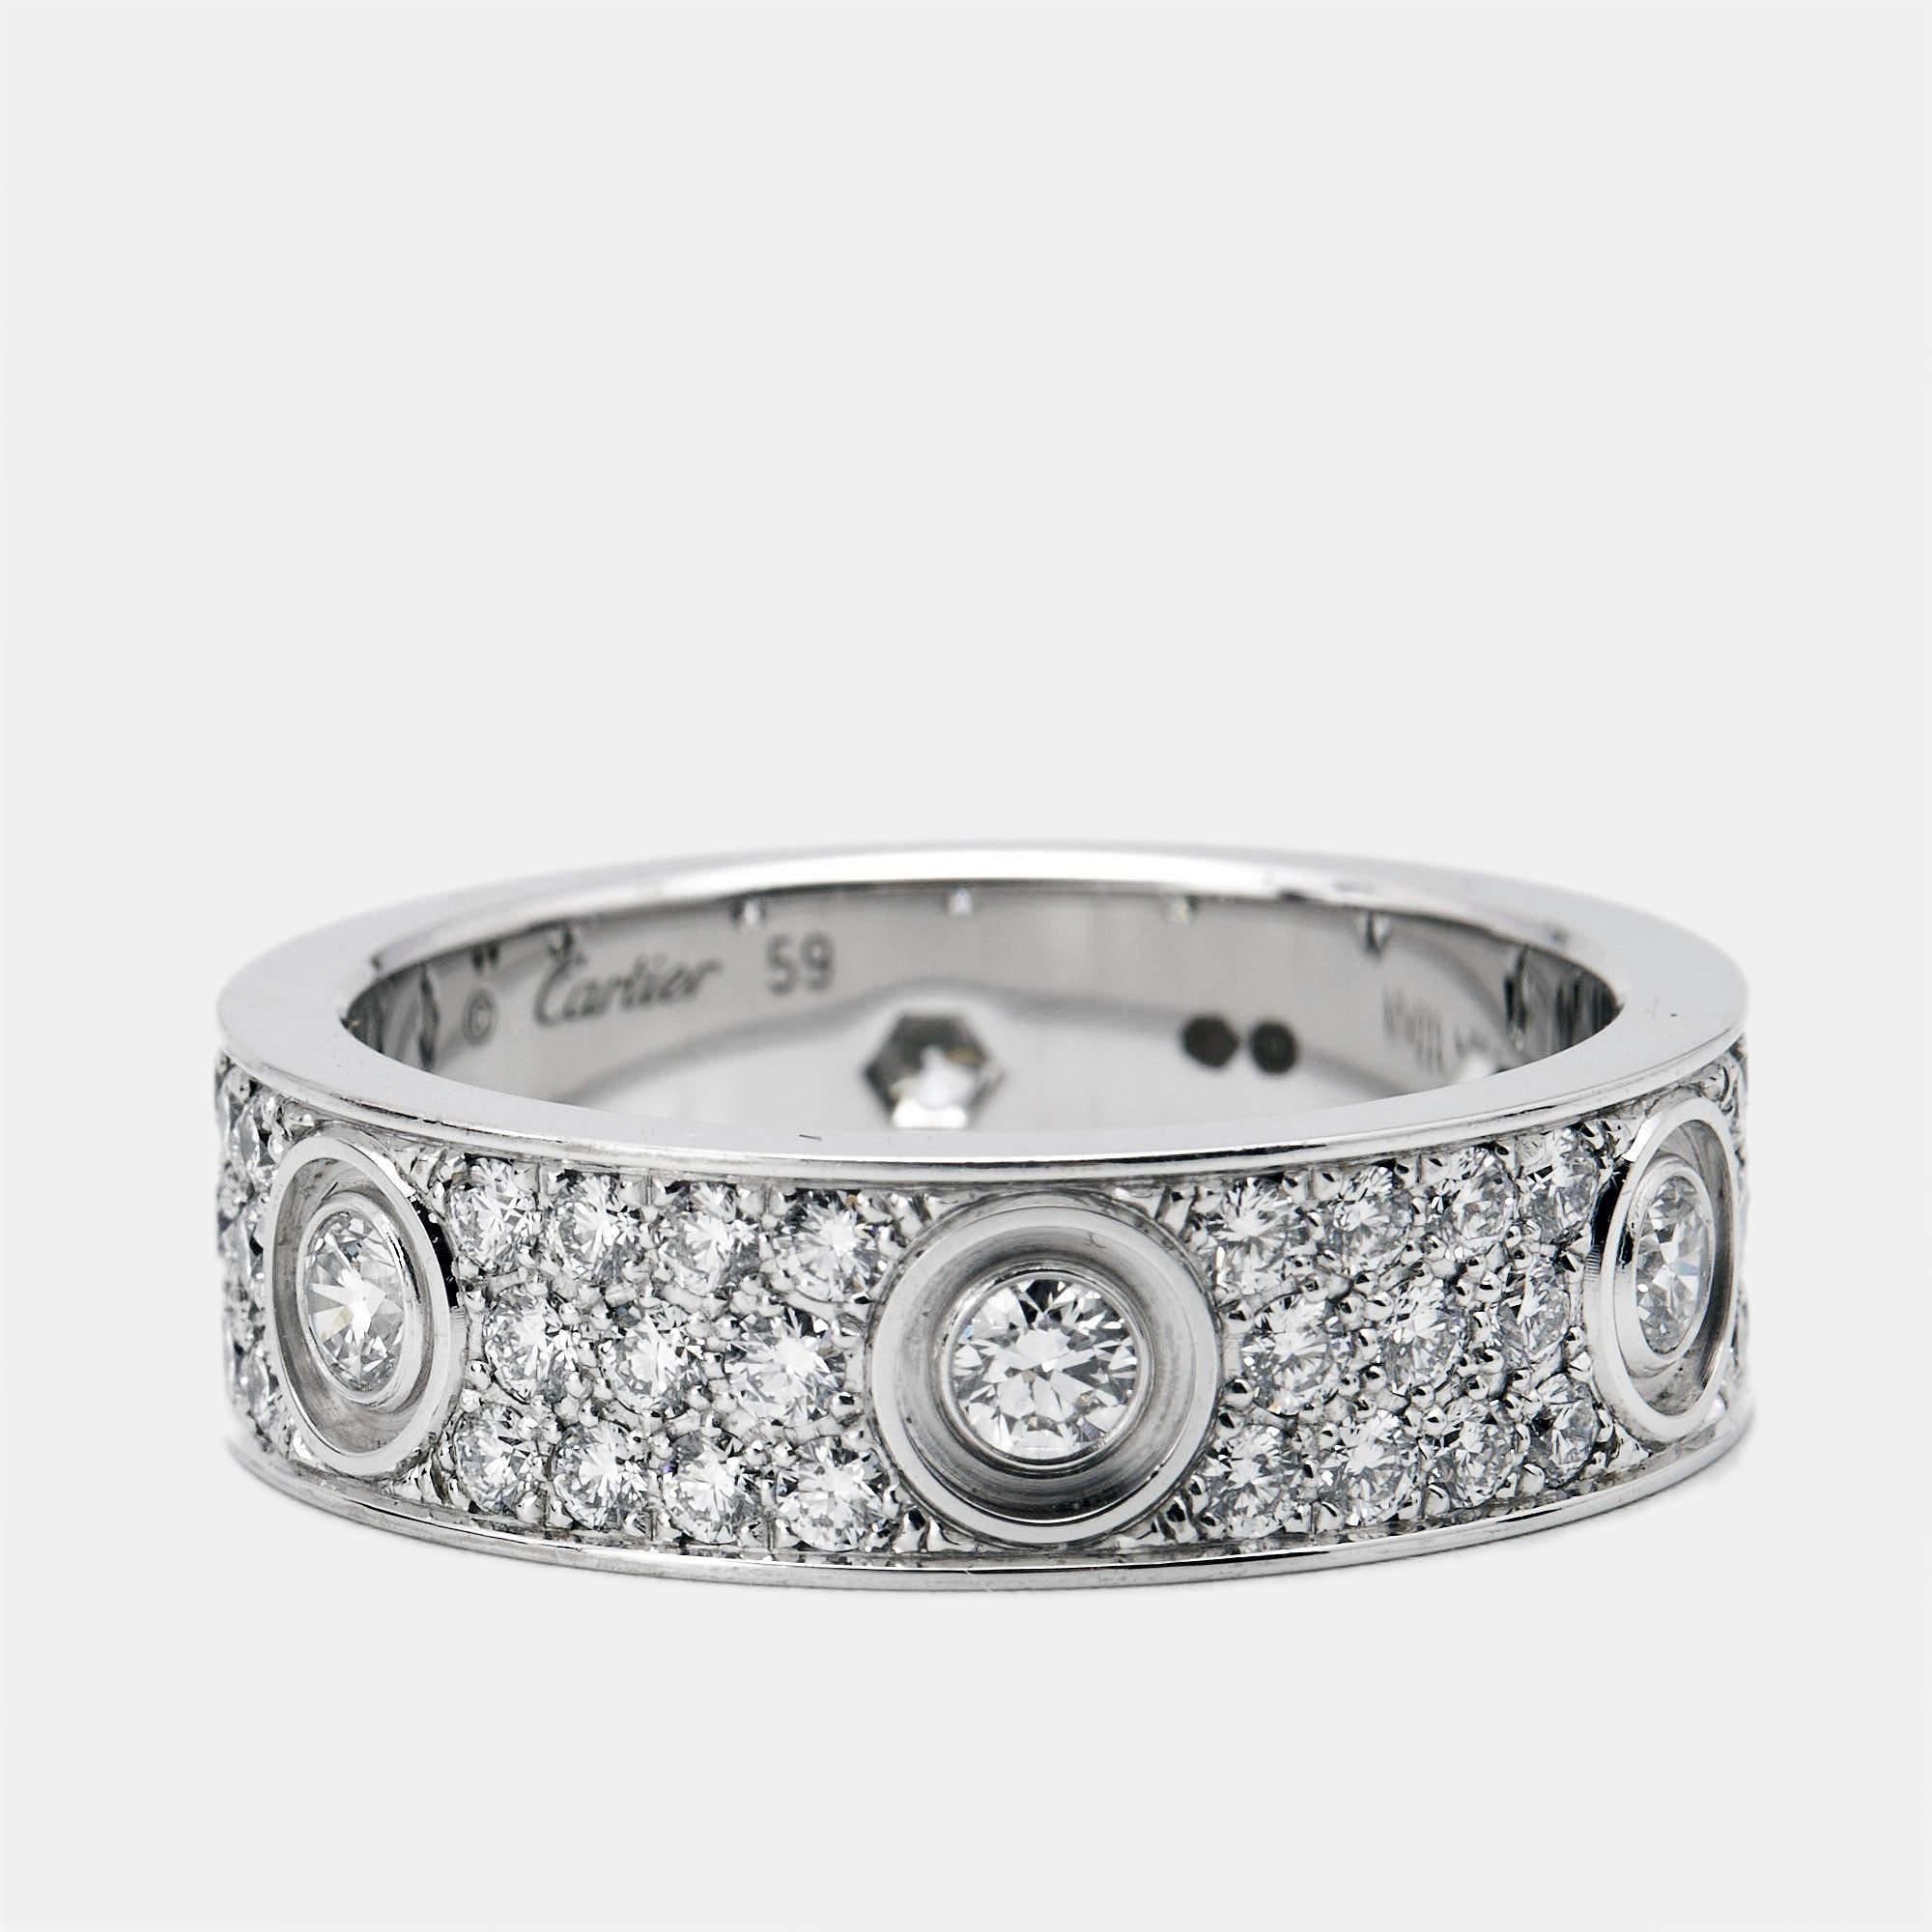 Uncut Cartier Love Diamonds 18k White Gold Ring Size 52